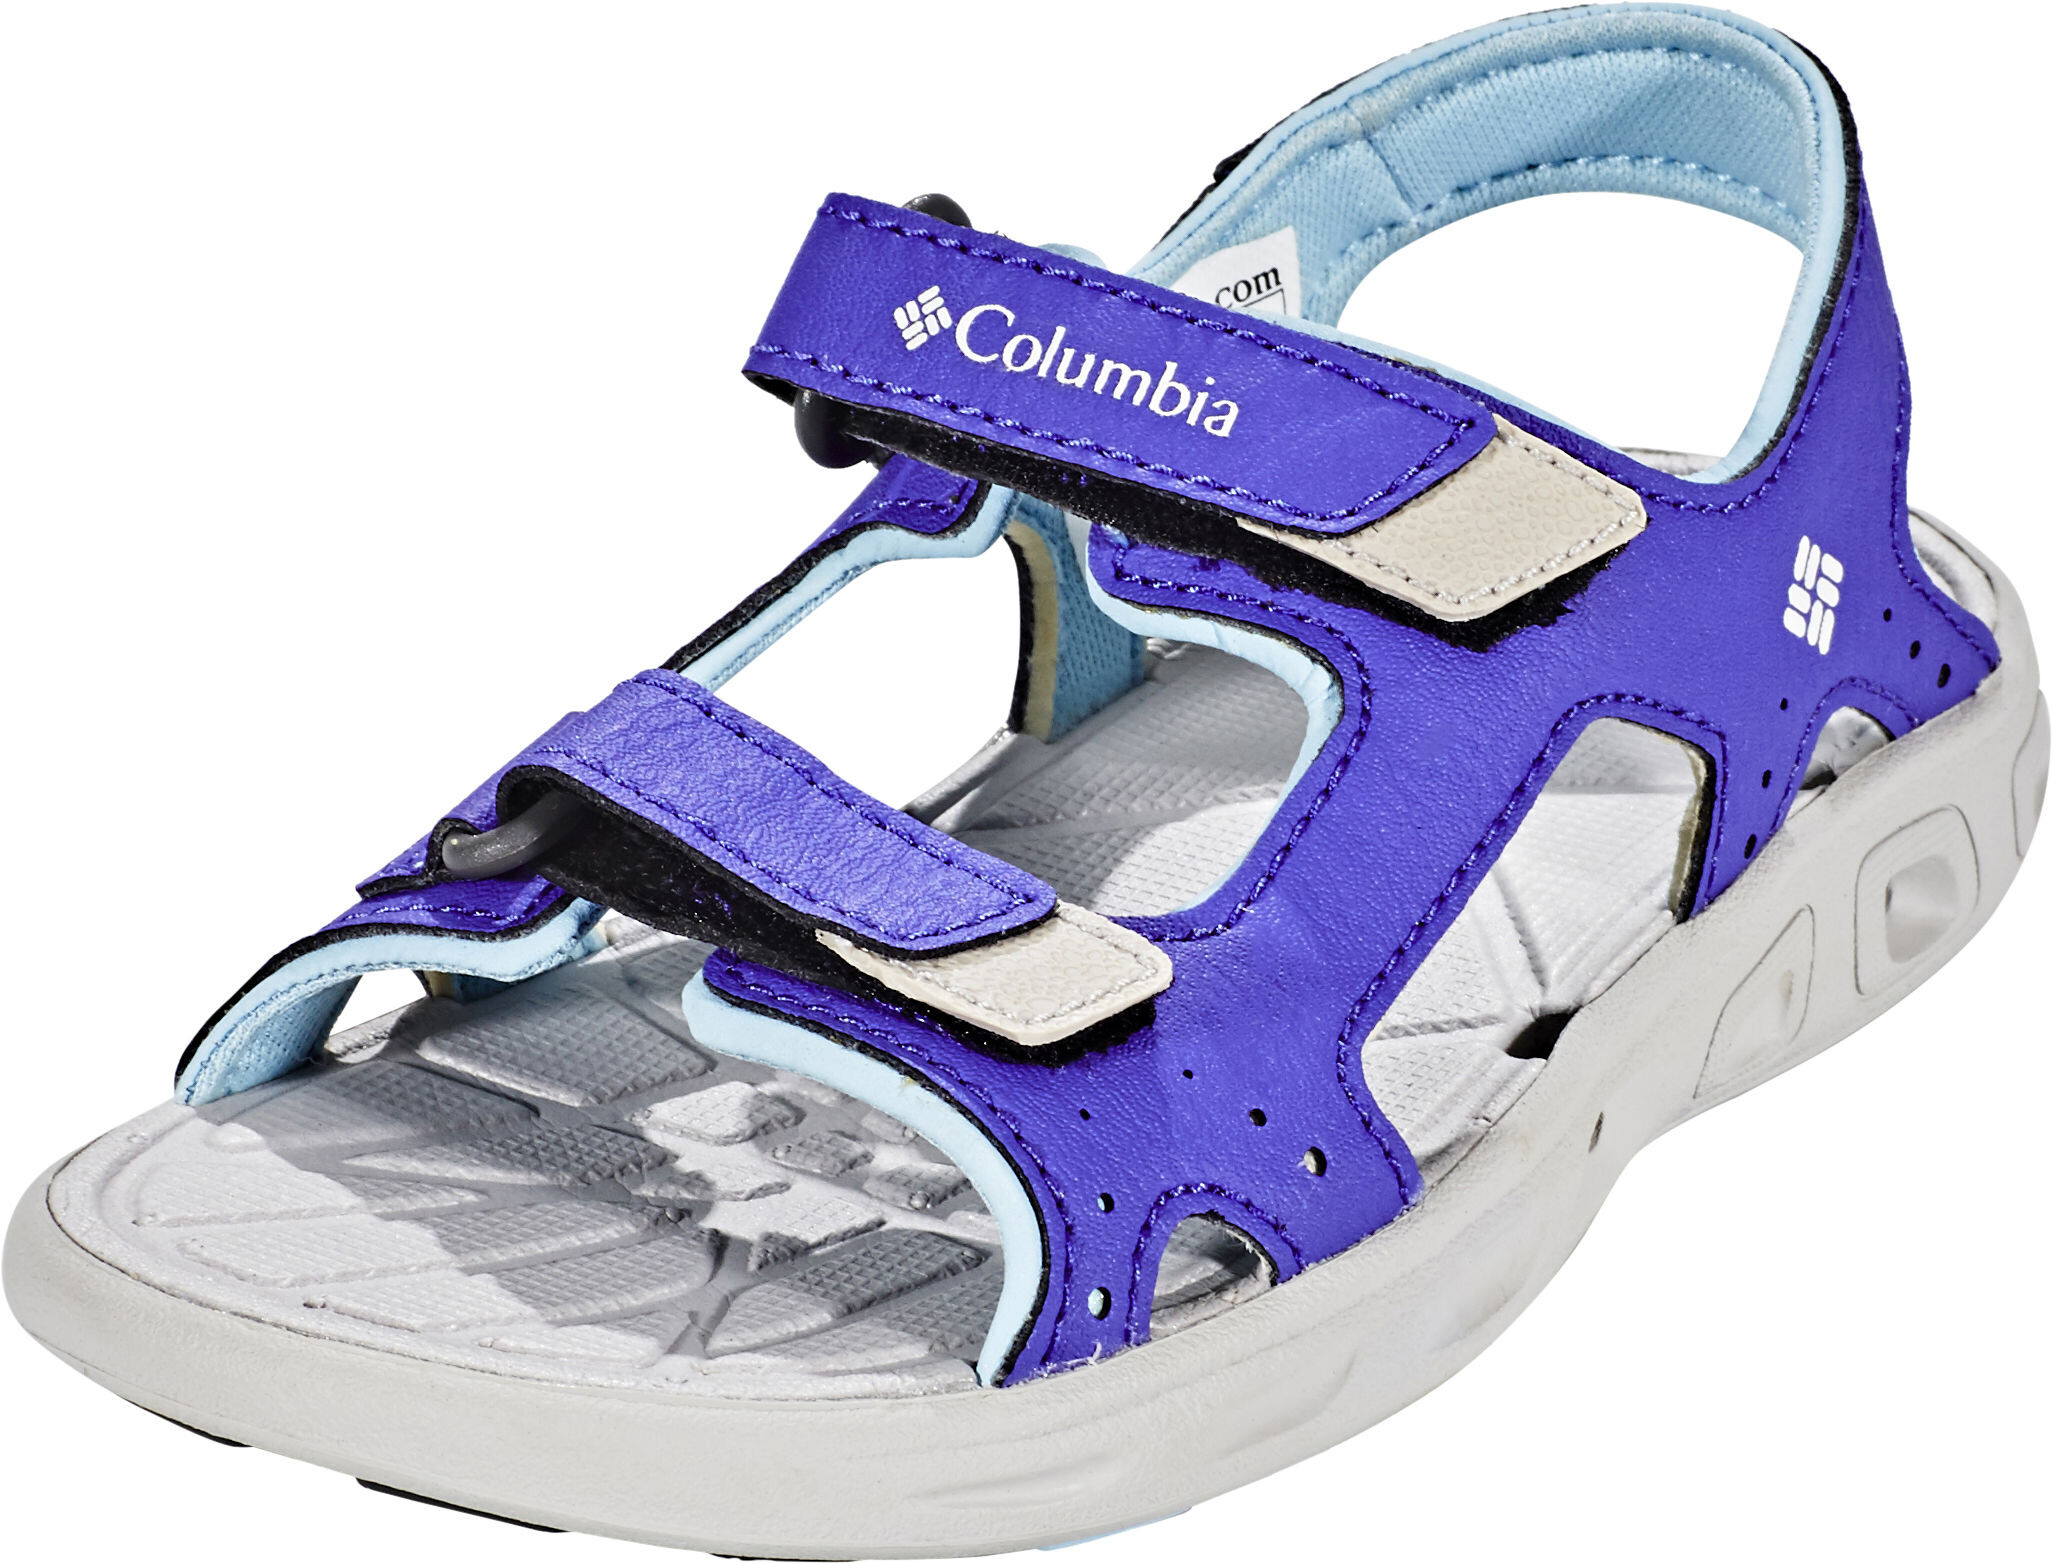 Columbia Techsun Vent Schuhe Kinder lila